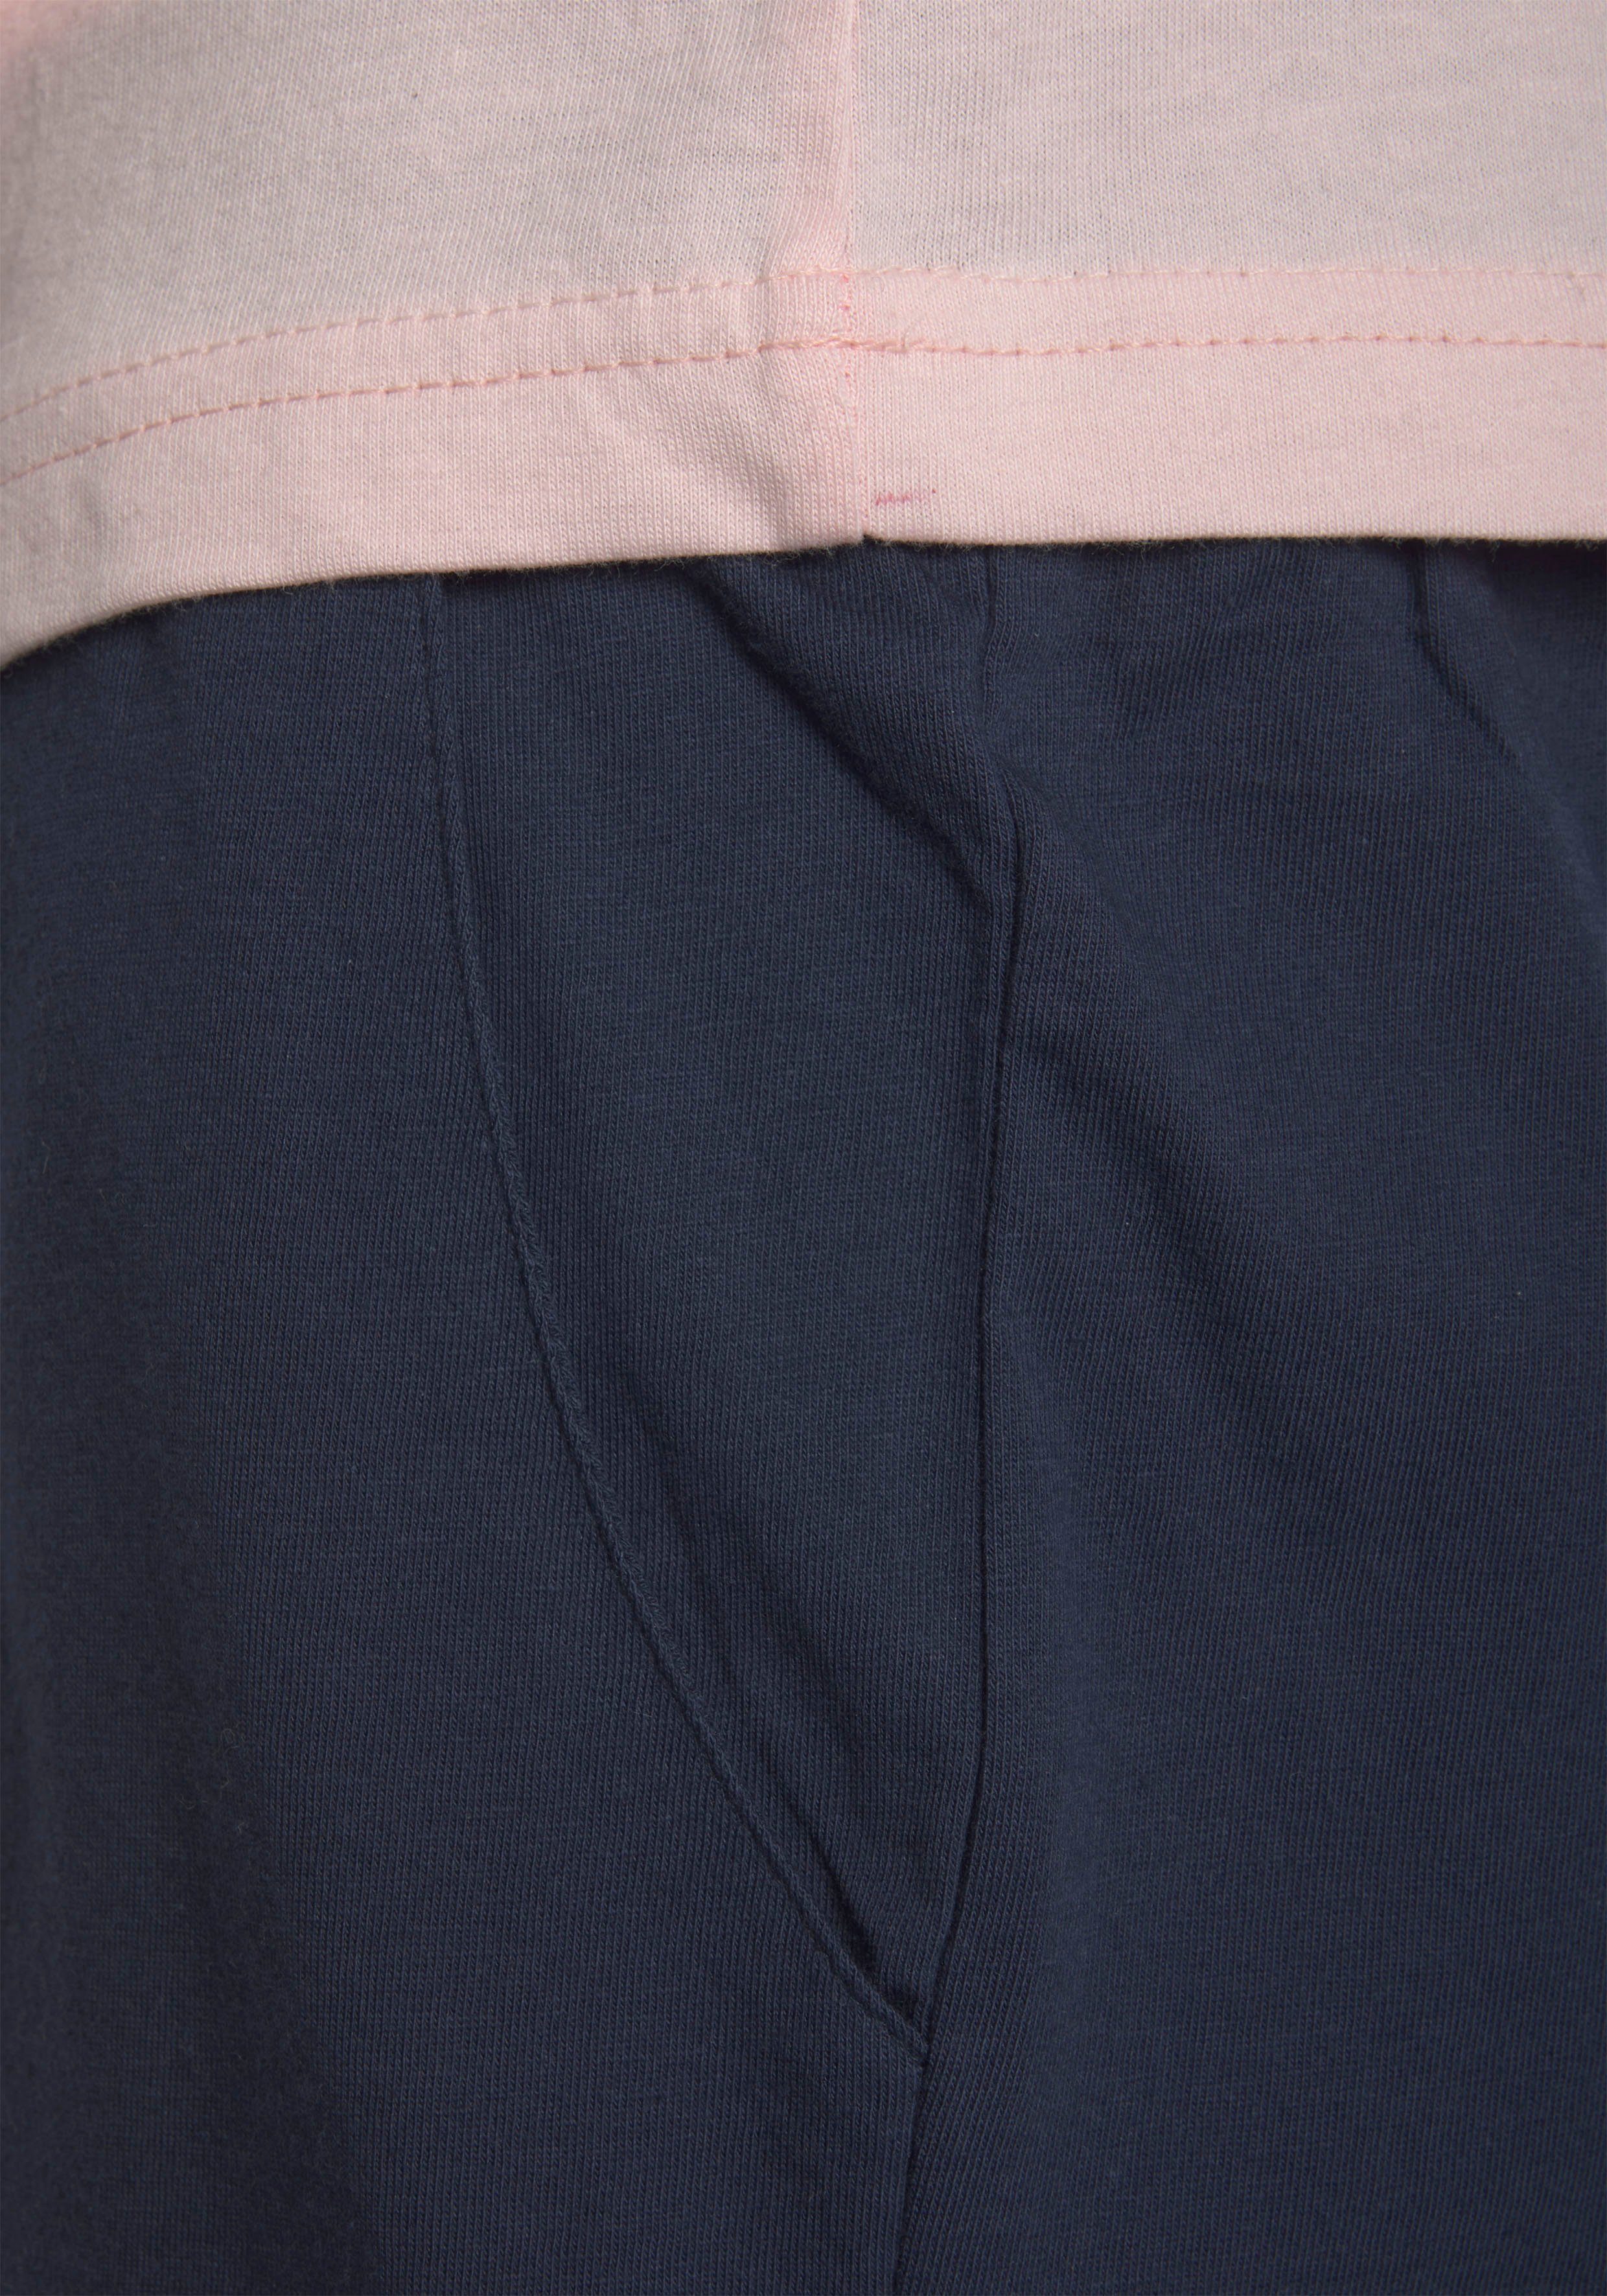 1 Raglanärmeln tlg., mit KangaROOS kontrastfarbenen (2 Shorty rosa-dunkelblau Stück)